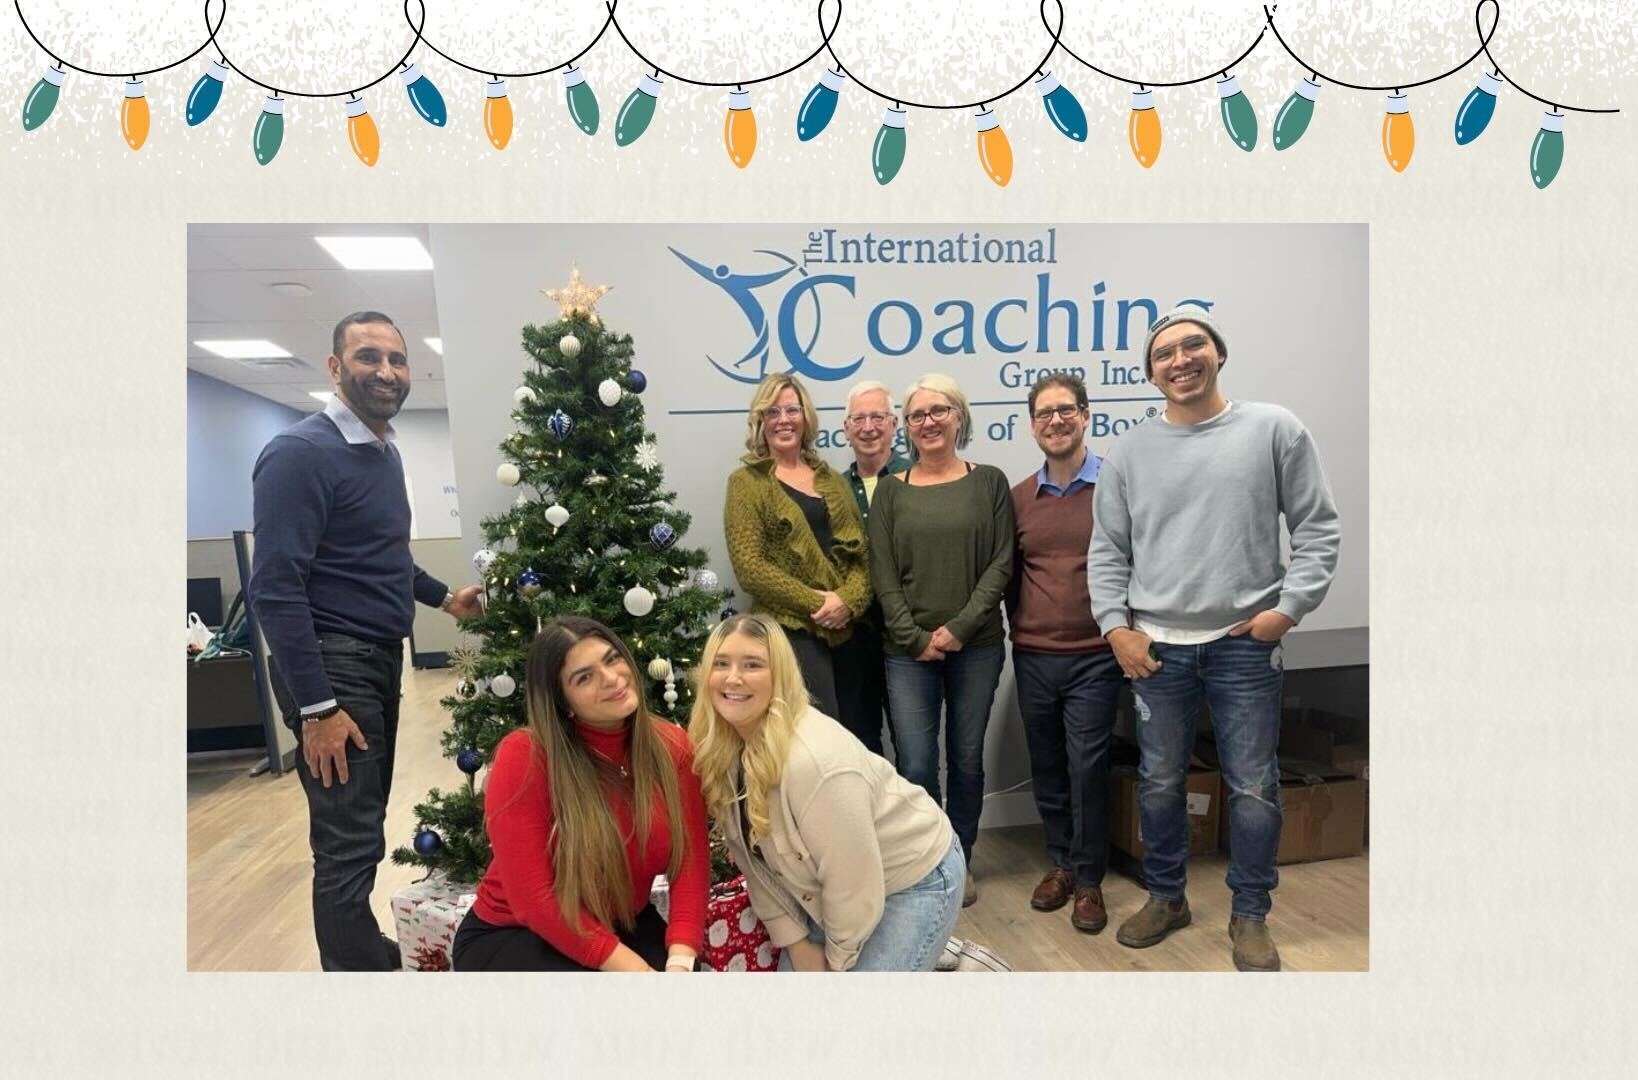 festive happy holidays photos of the International Coaching Group Team around the Christmas tree